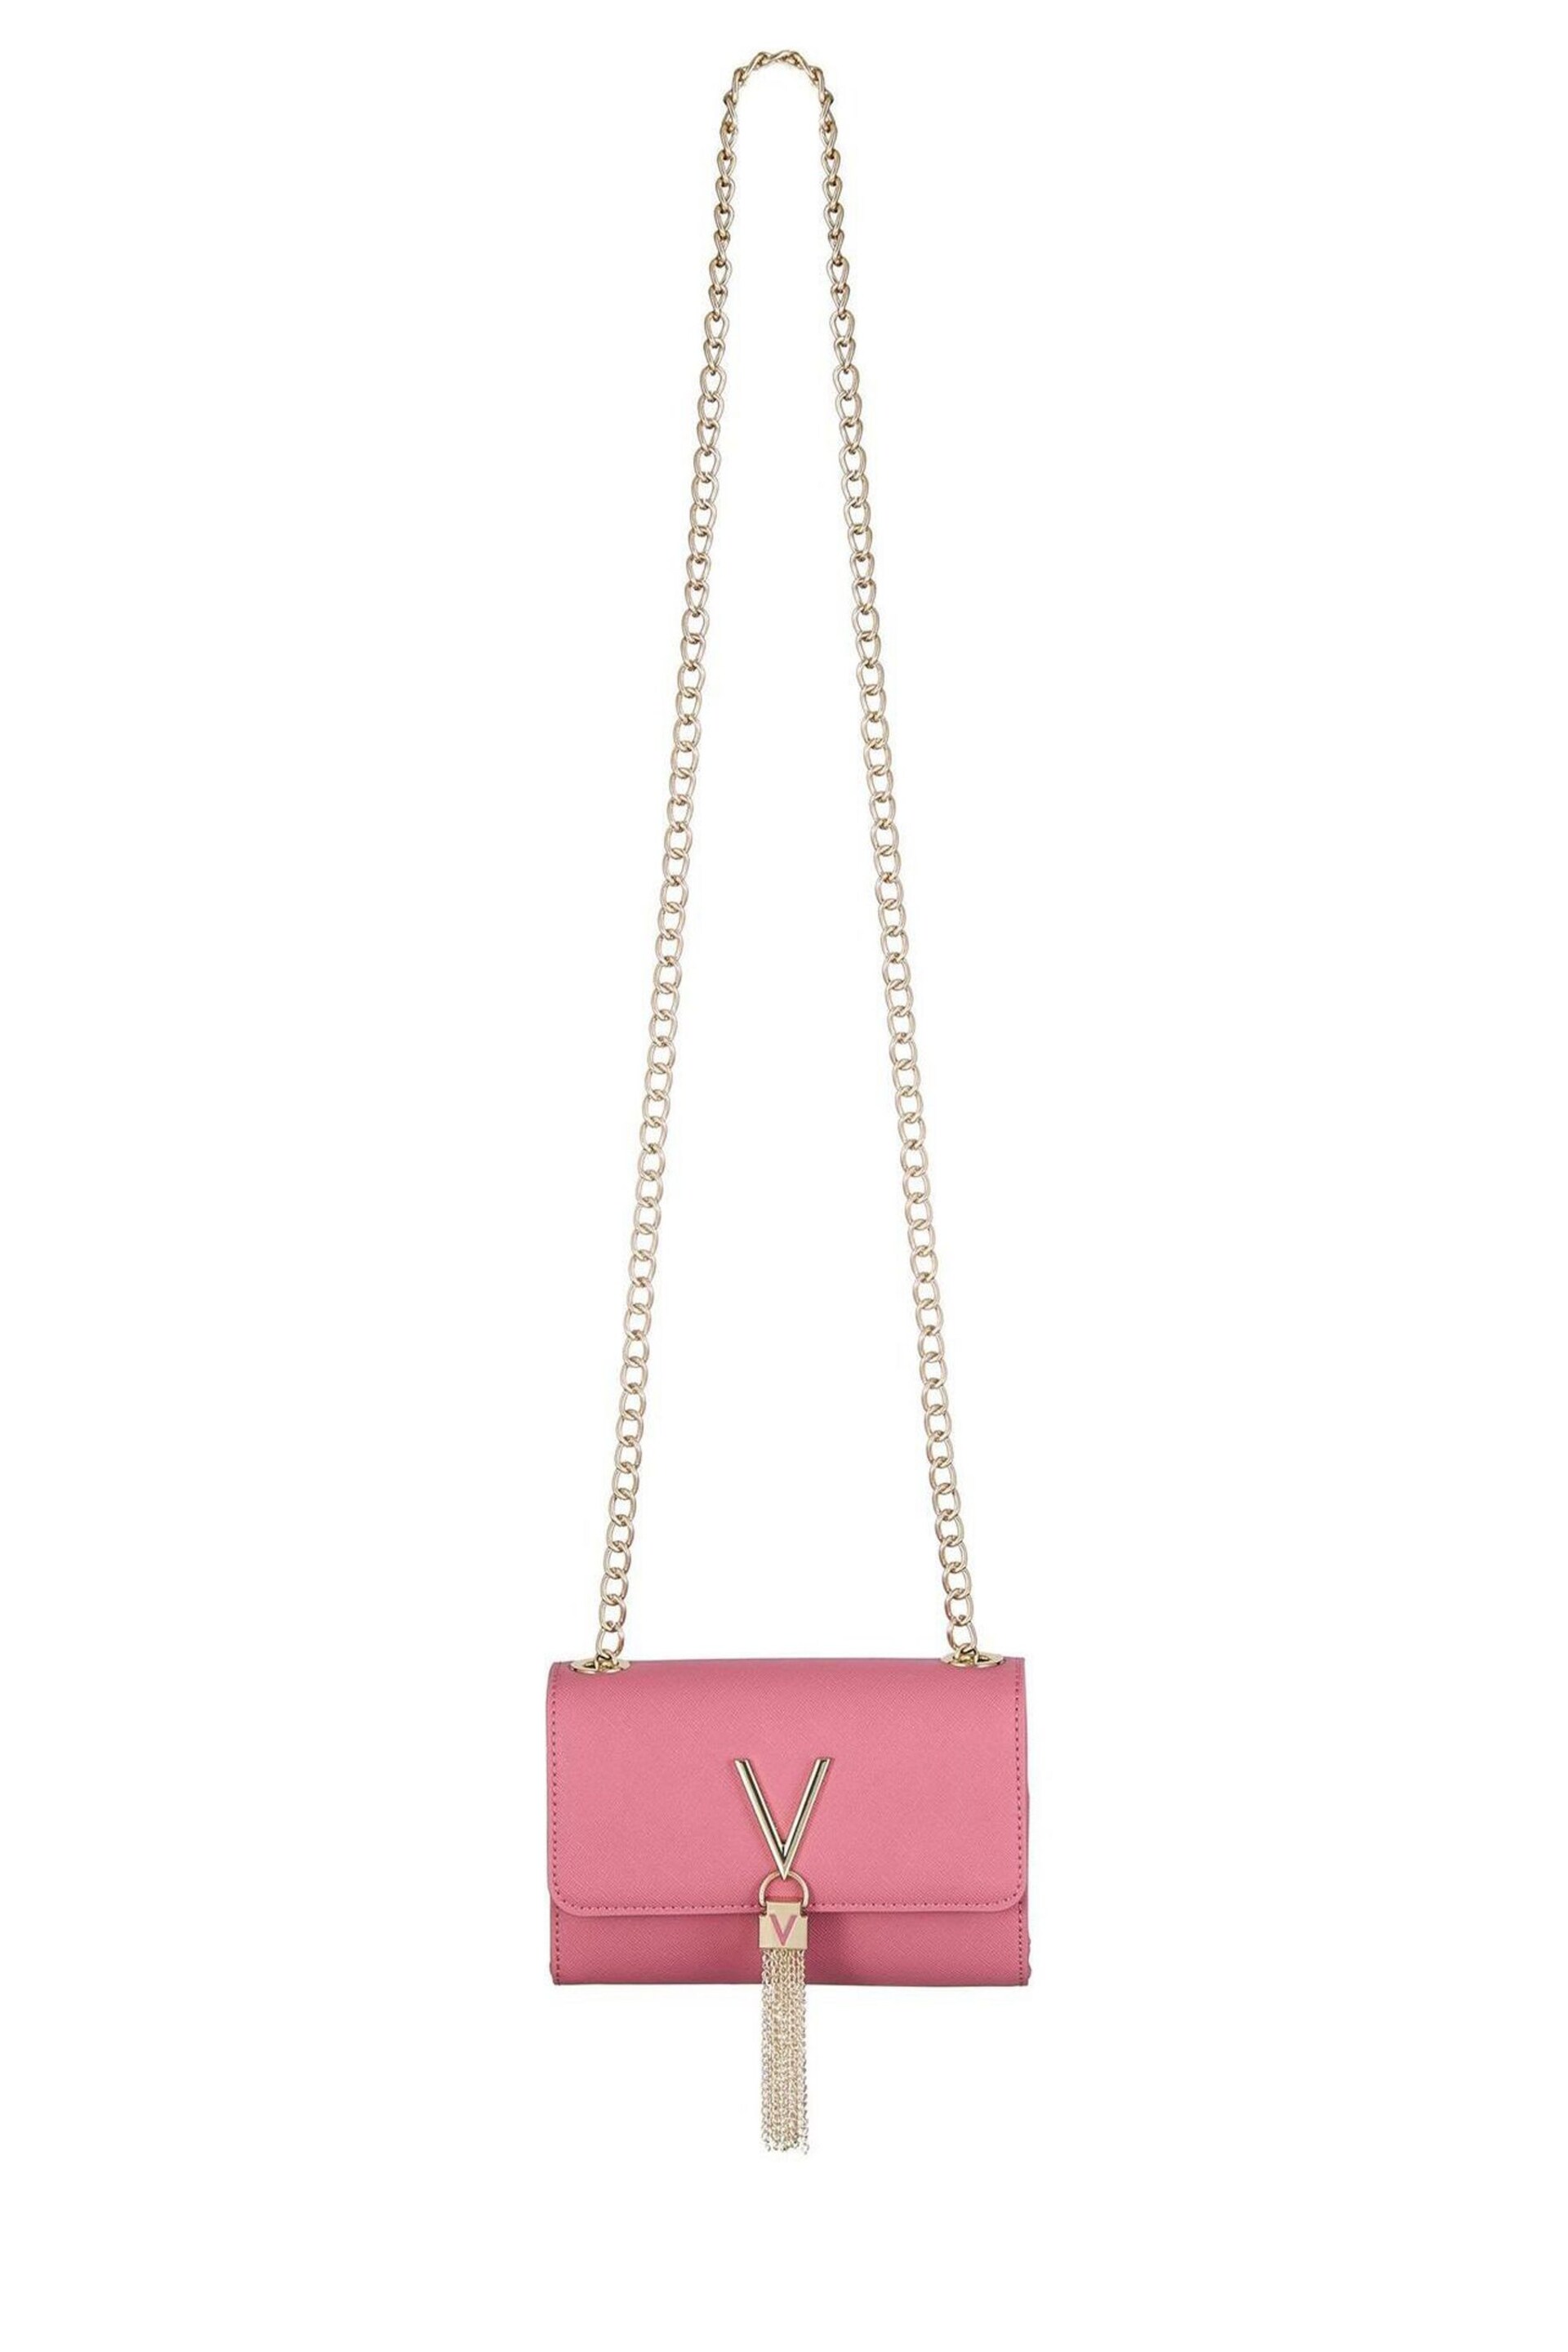 Valentino Bags Pink Divina Chain Crossbody Tassel Bag - Image 1 of 3